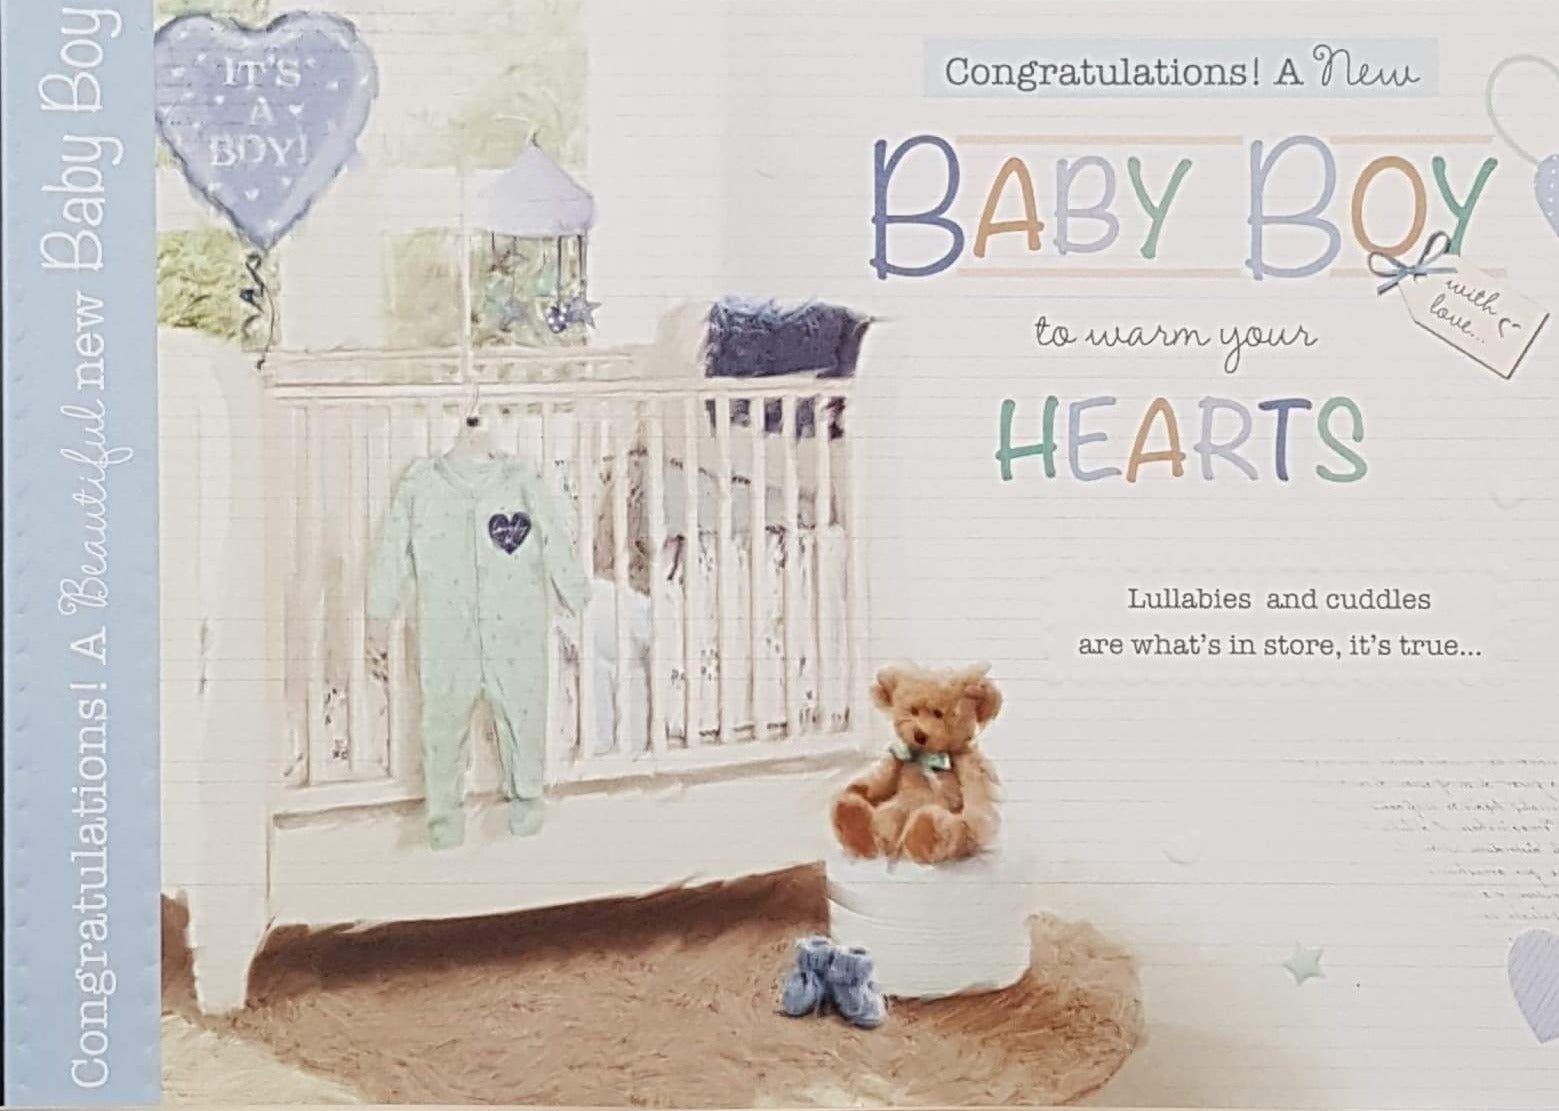 New Baby Card - Boy / Heart - A Shaped Blue Balloon & A Teddy Bear Wearing A Blue Bow